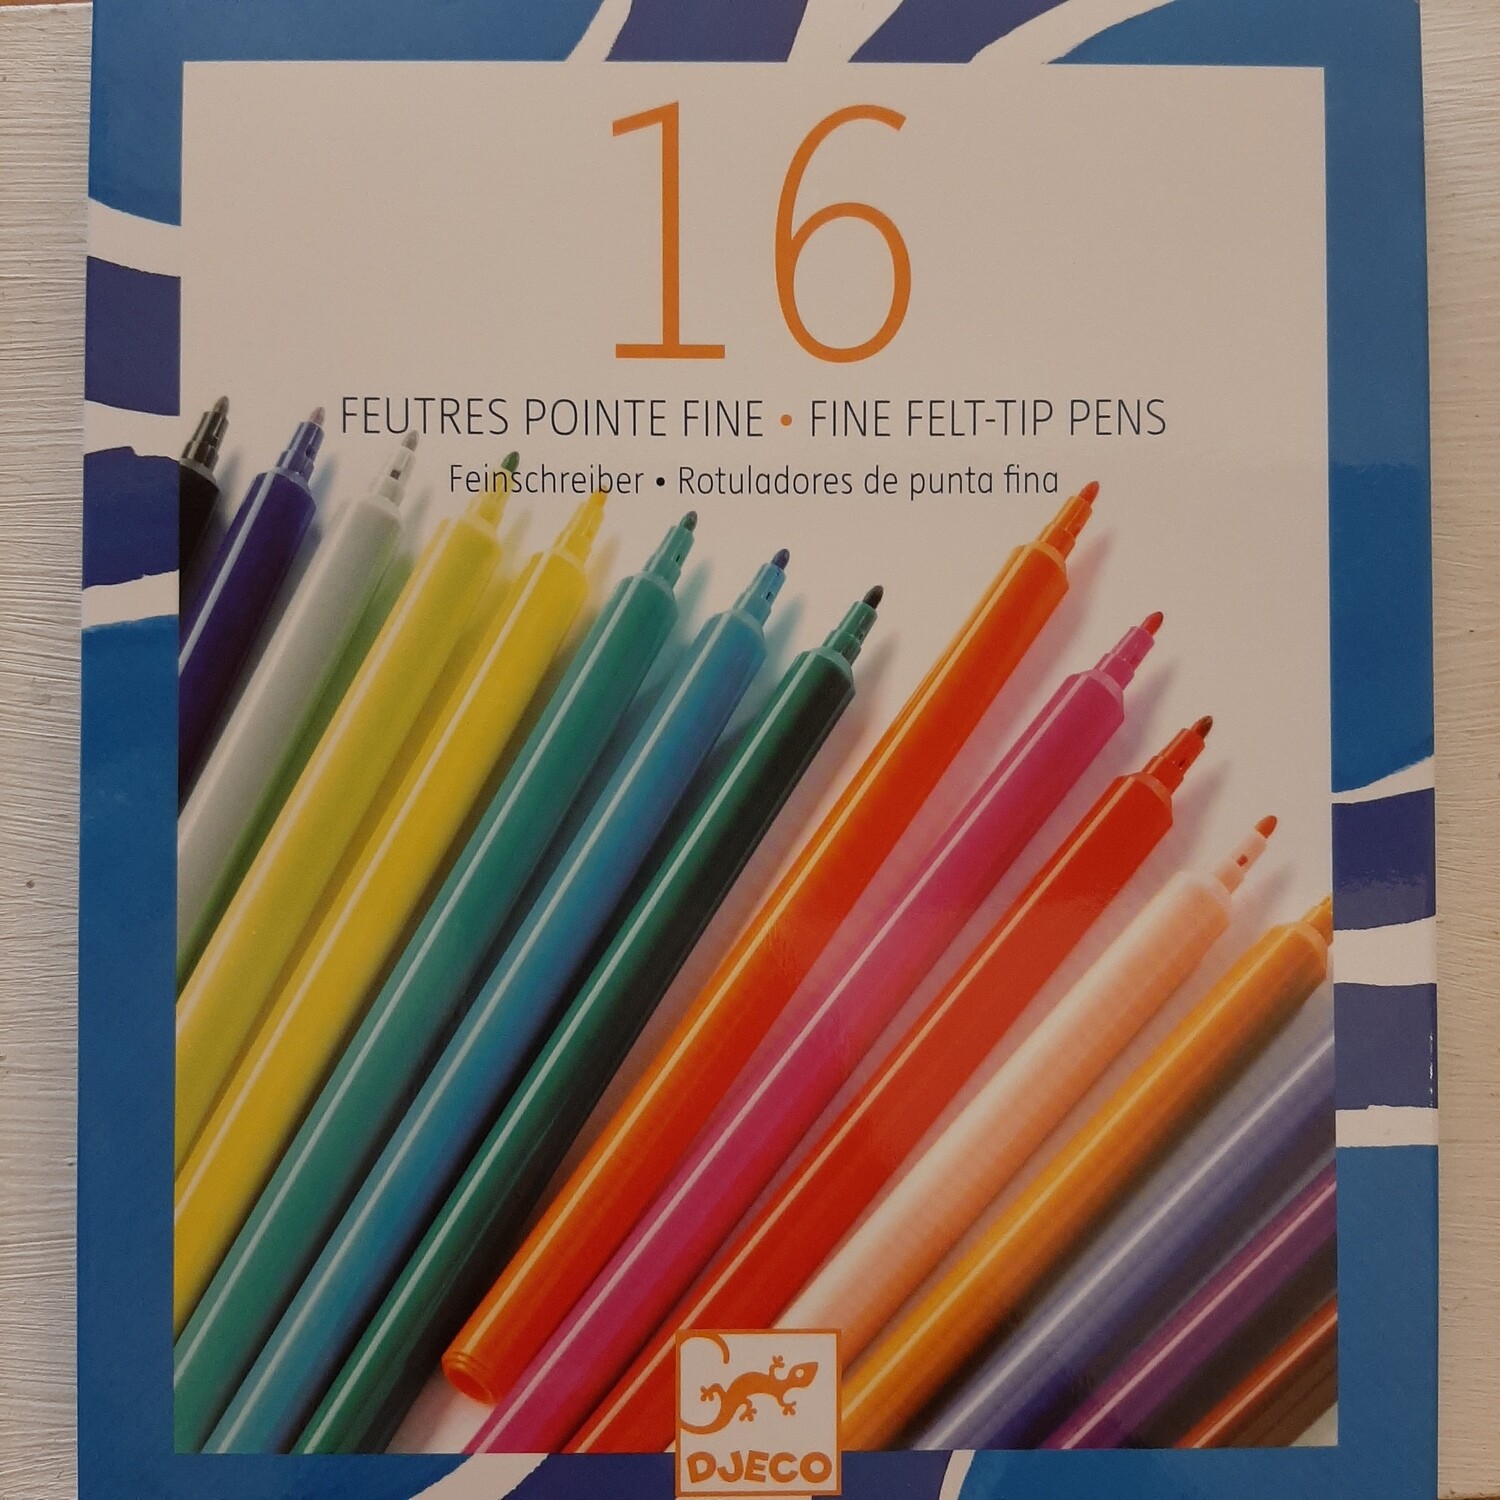 Djeco 16 Fine Felt-Tip Pens